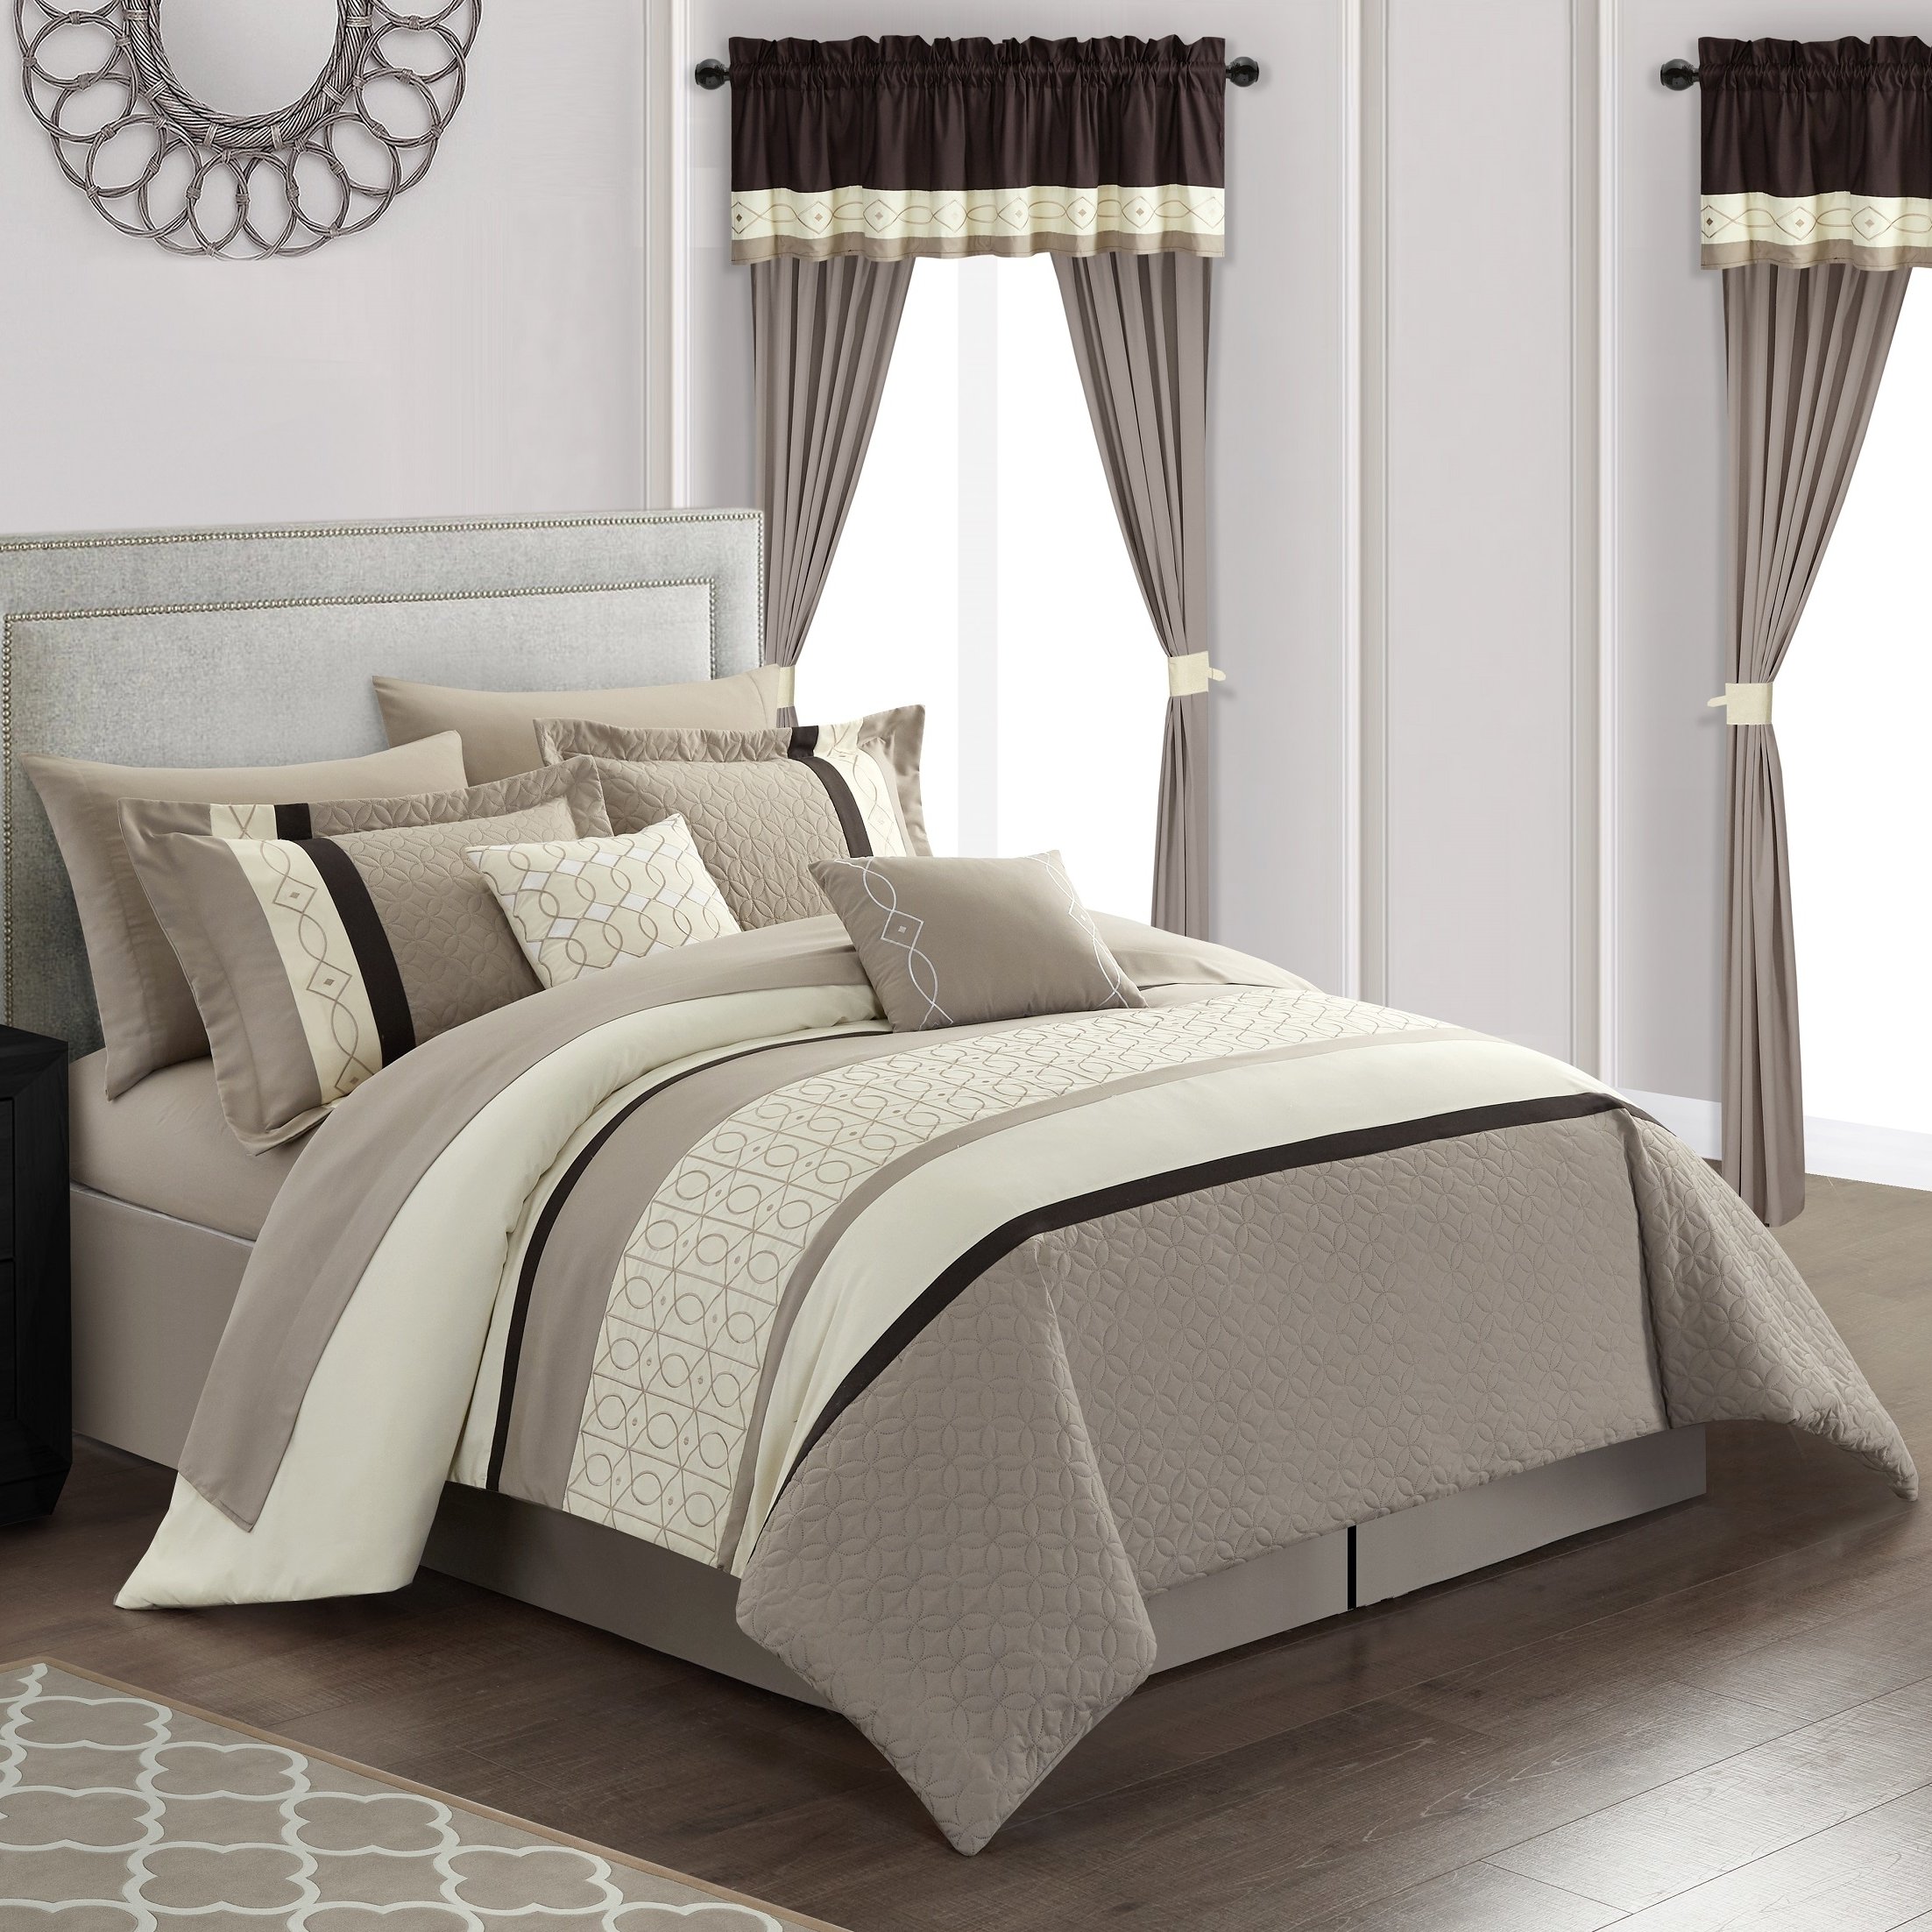 Katrein 20 Piece Comforter Set Color Block Geometric Embroidered Bed in a Bag Bedding - beige, queen